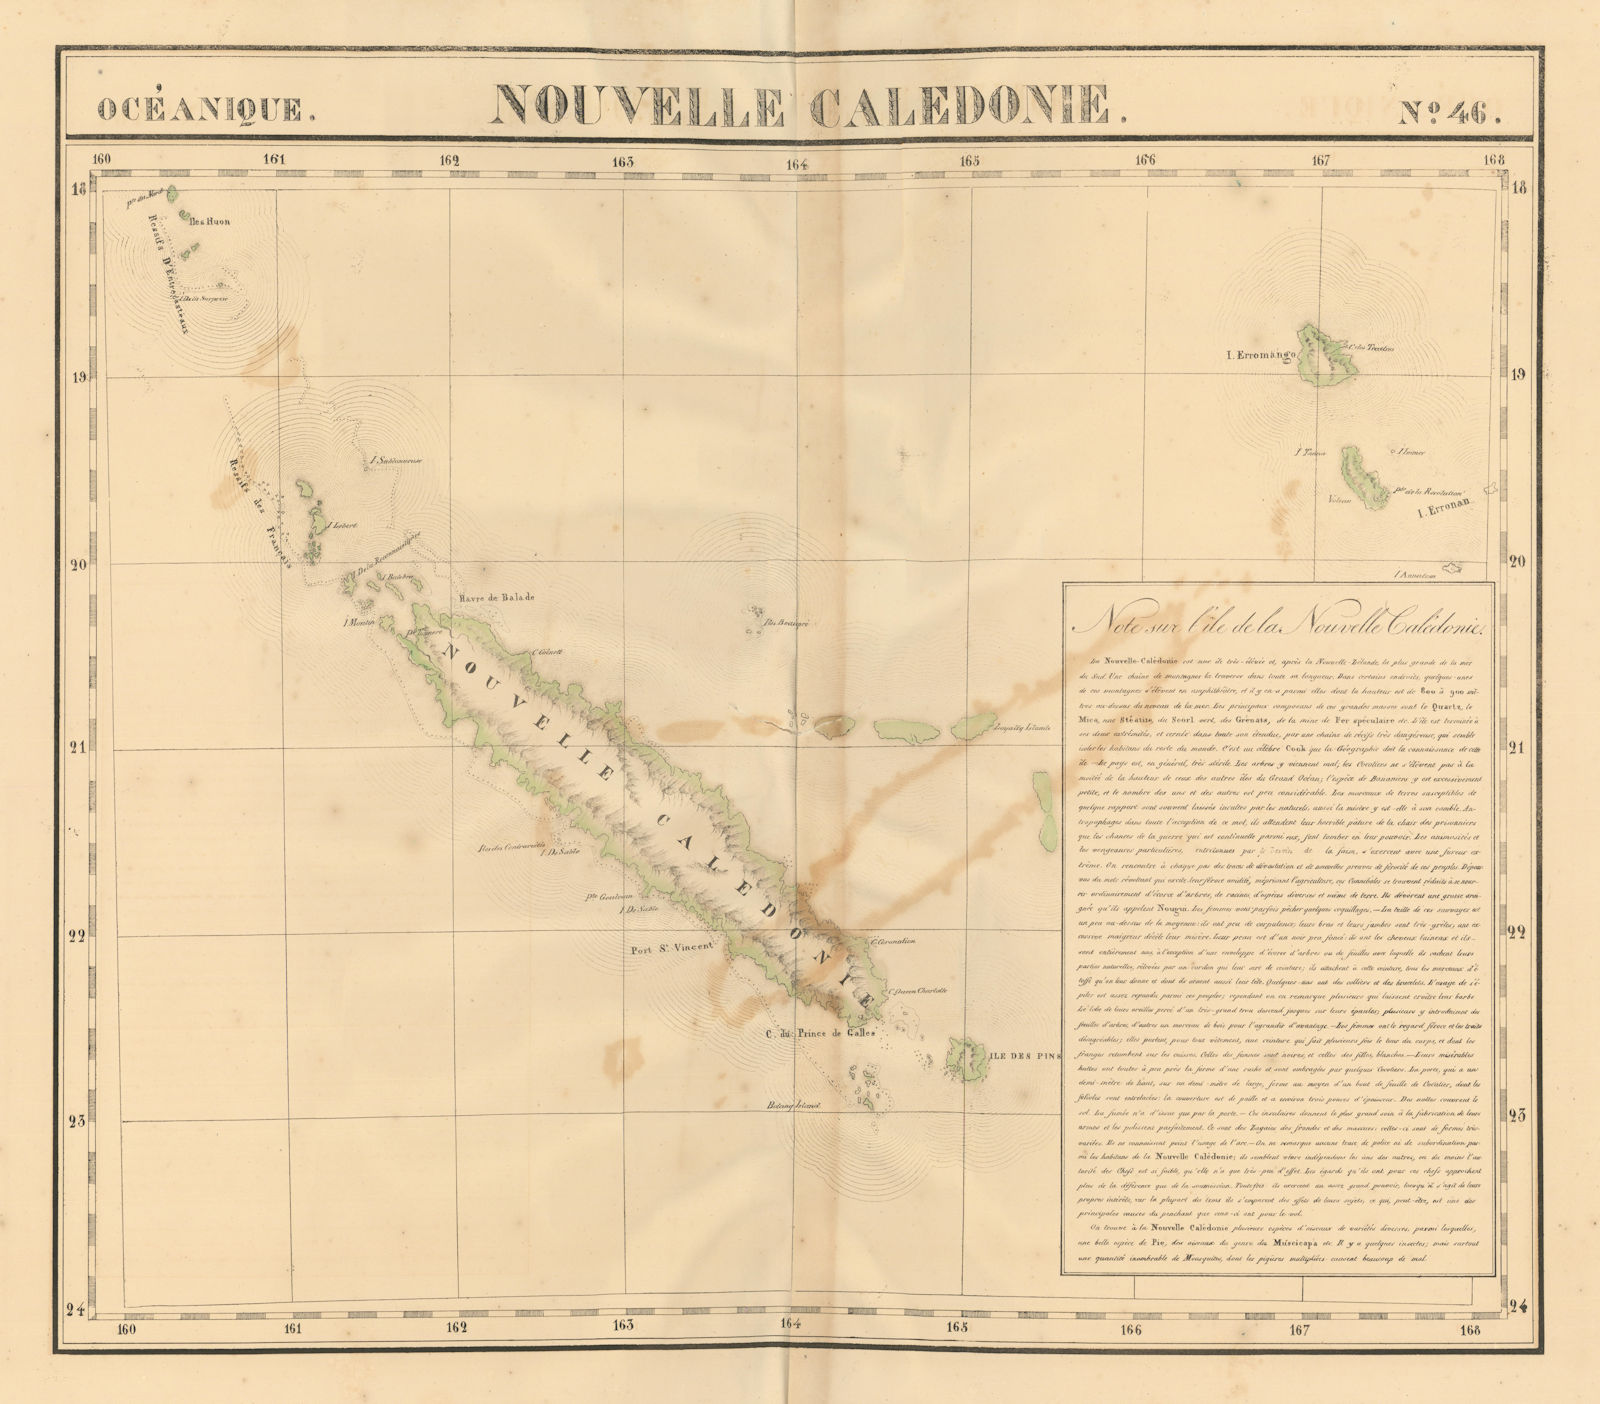 Associate Product Océanique. Nouvelle Caledonie #46. New Caledonia Vanuatu. VANDERMAELEN 1827 map